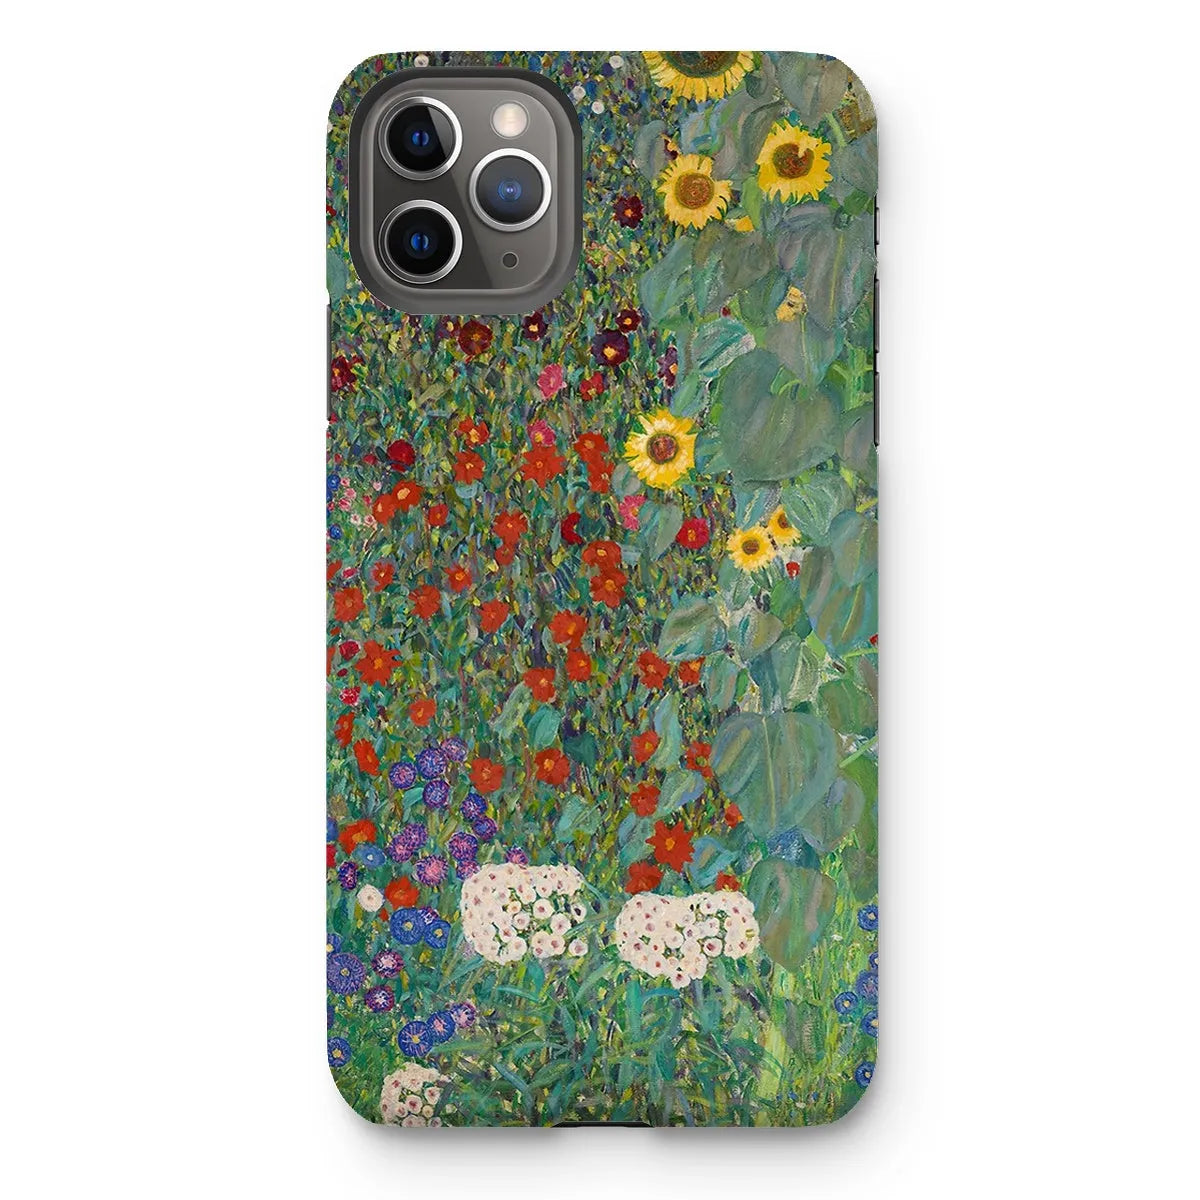 Farm Garden With Sunflowers Art Phone Case - Gustav Klimt - Iphone 11 Pro Max / Matte - Mobile Phone Cases - Aesthetic